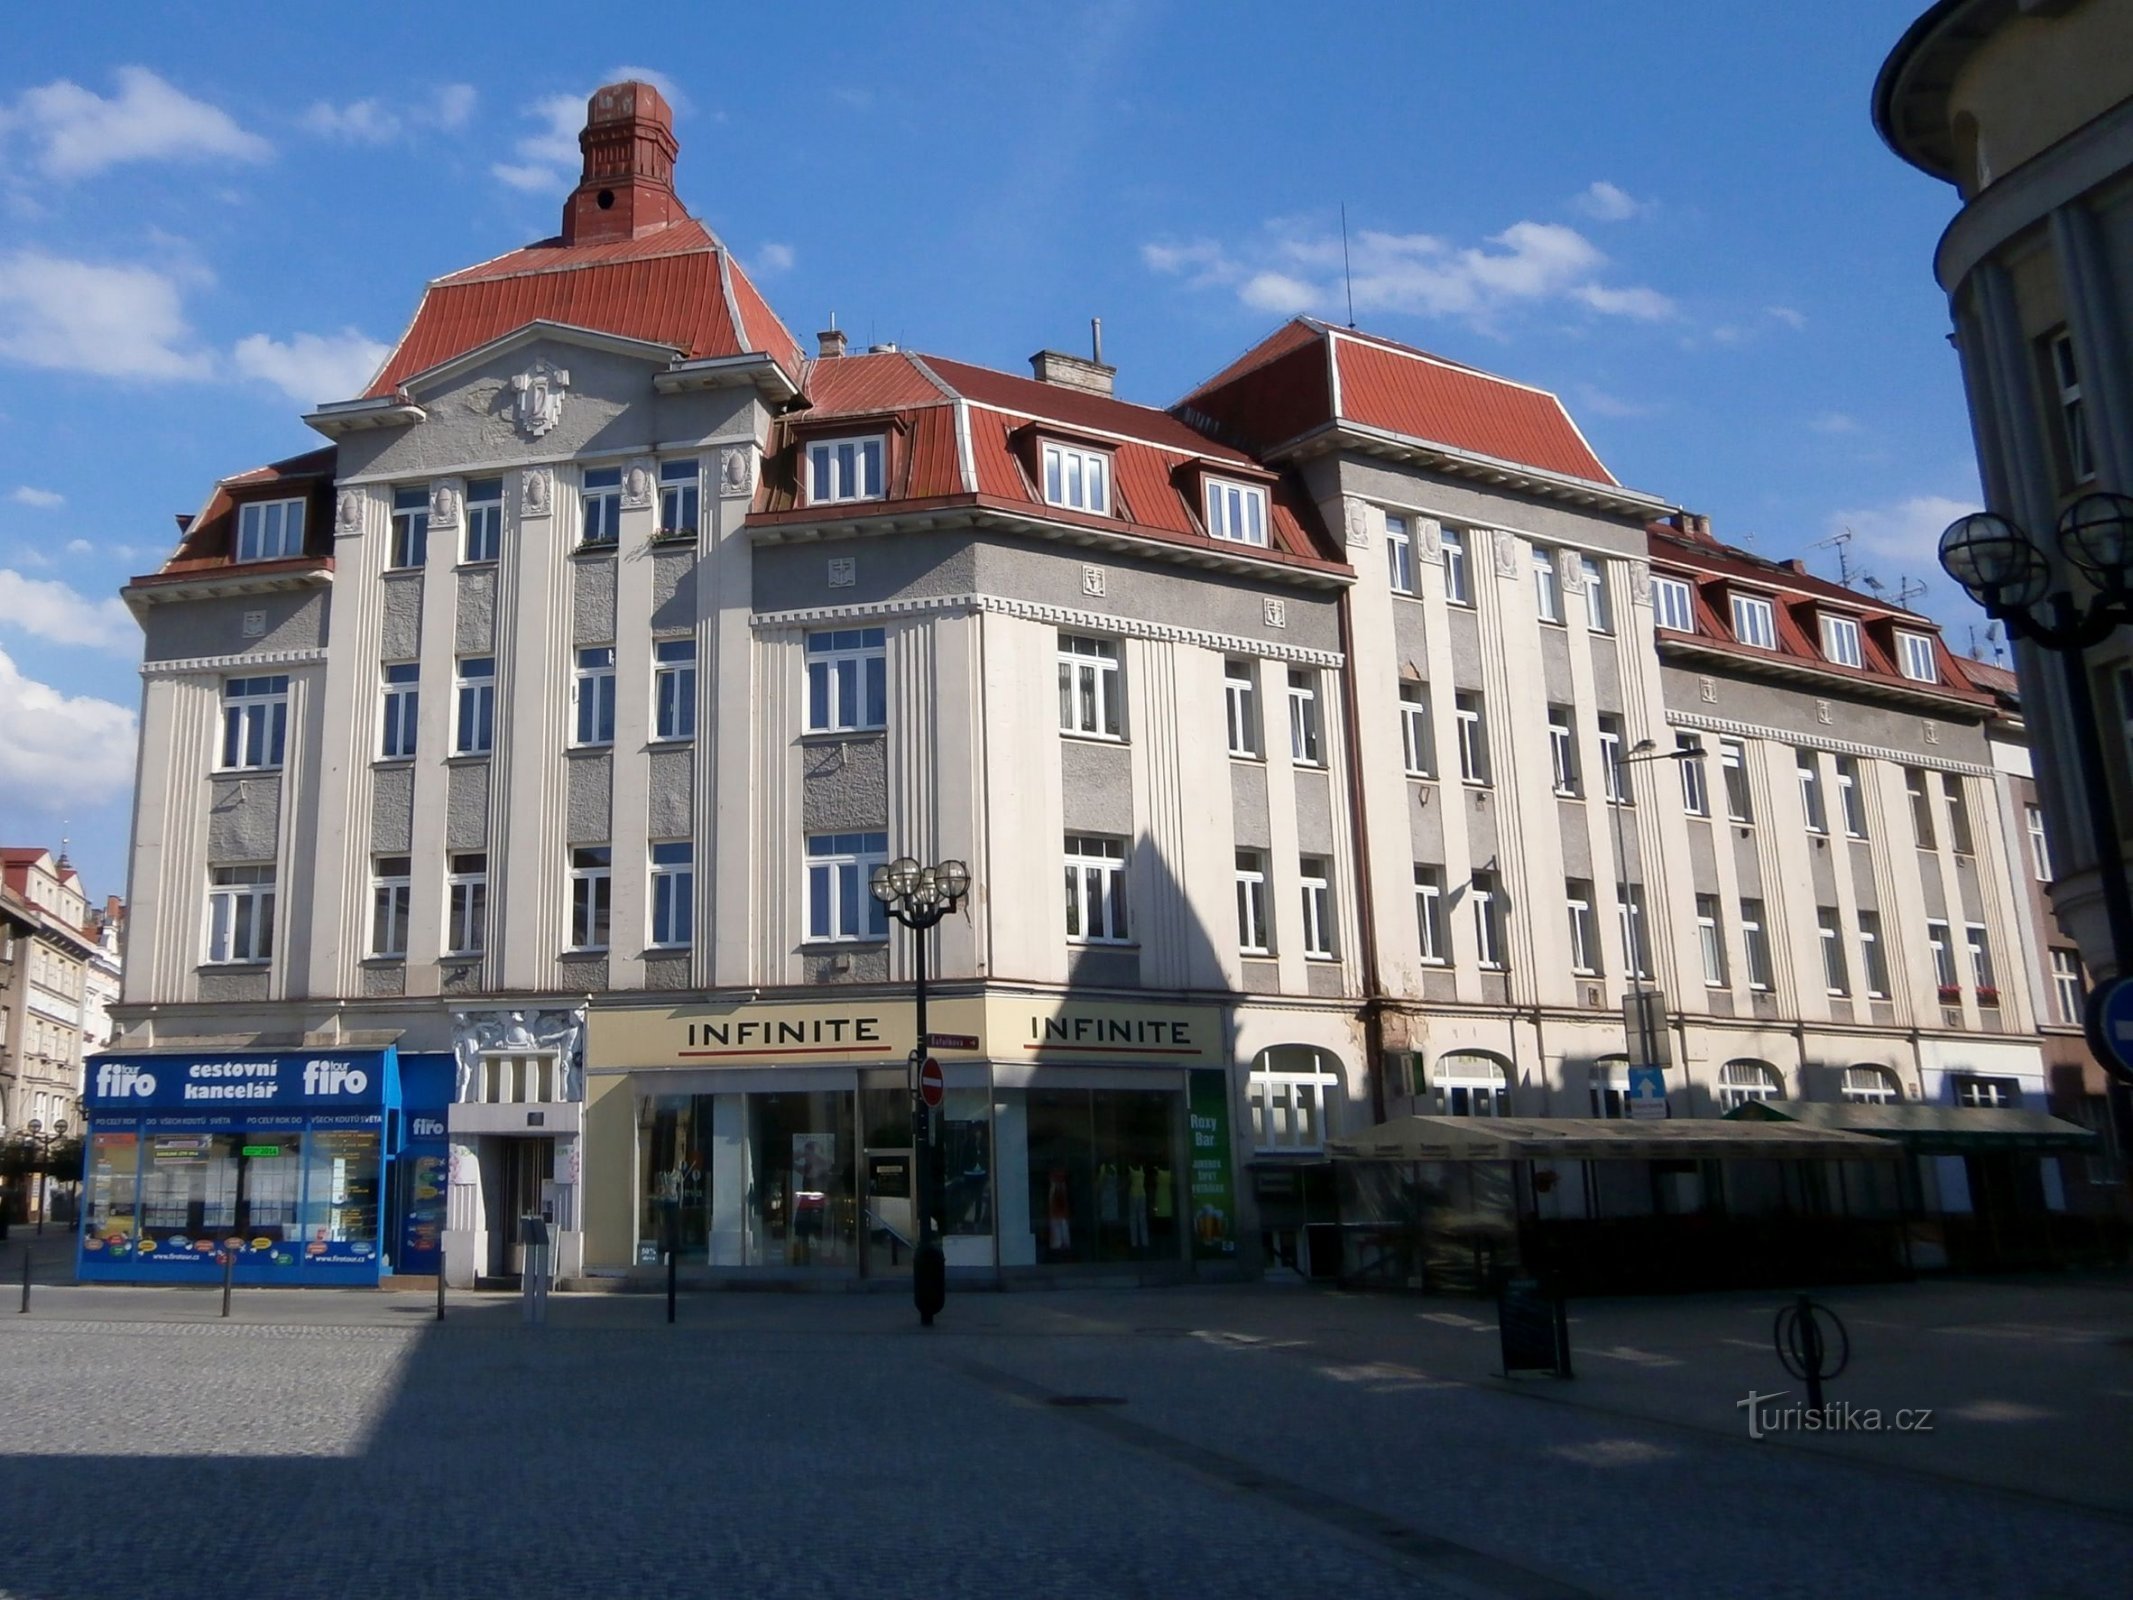 Casa comercial (Hradec Králové, 28.6.2014)